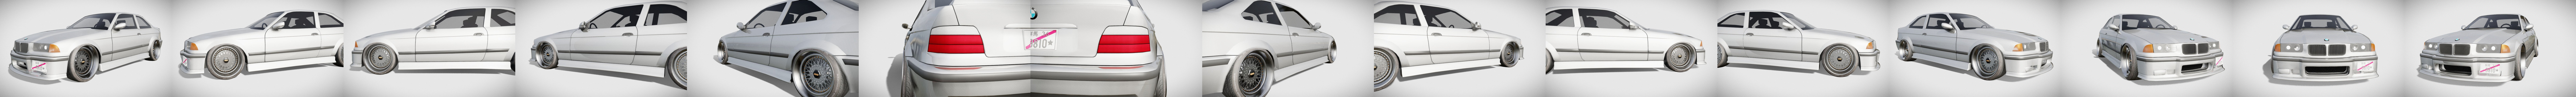 FREE] BMW M3 E30 - Download Free 3D model by Martin Trafas